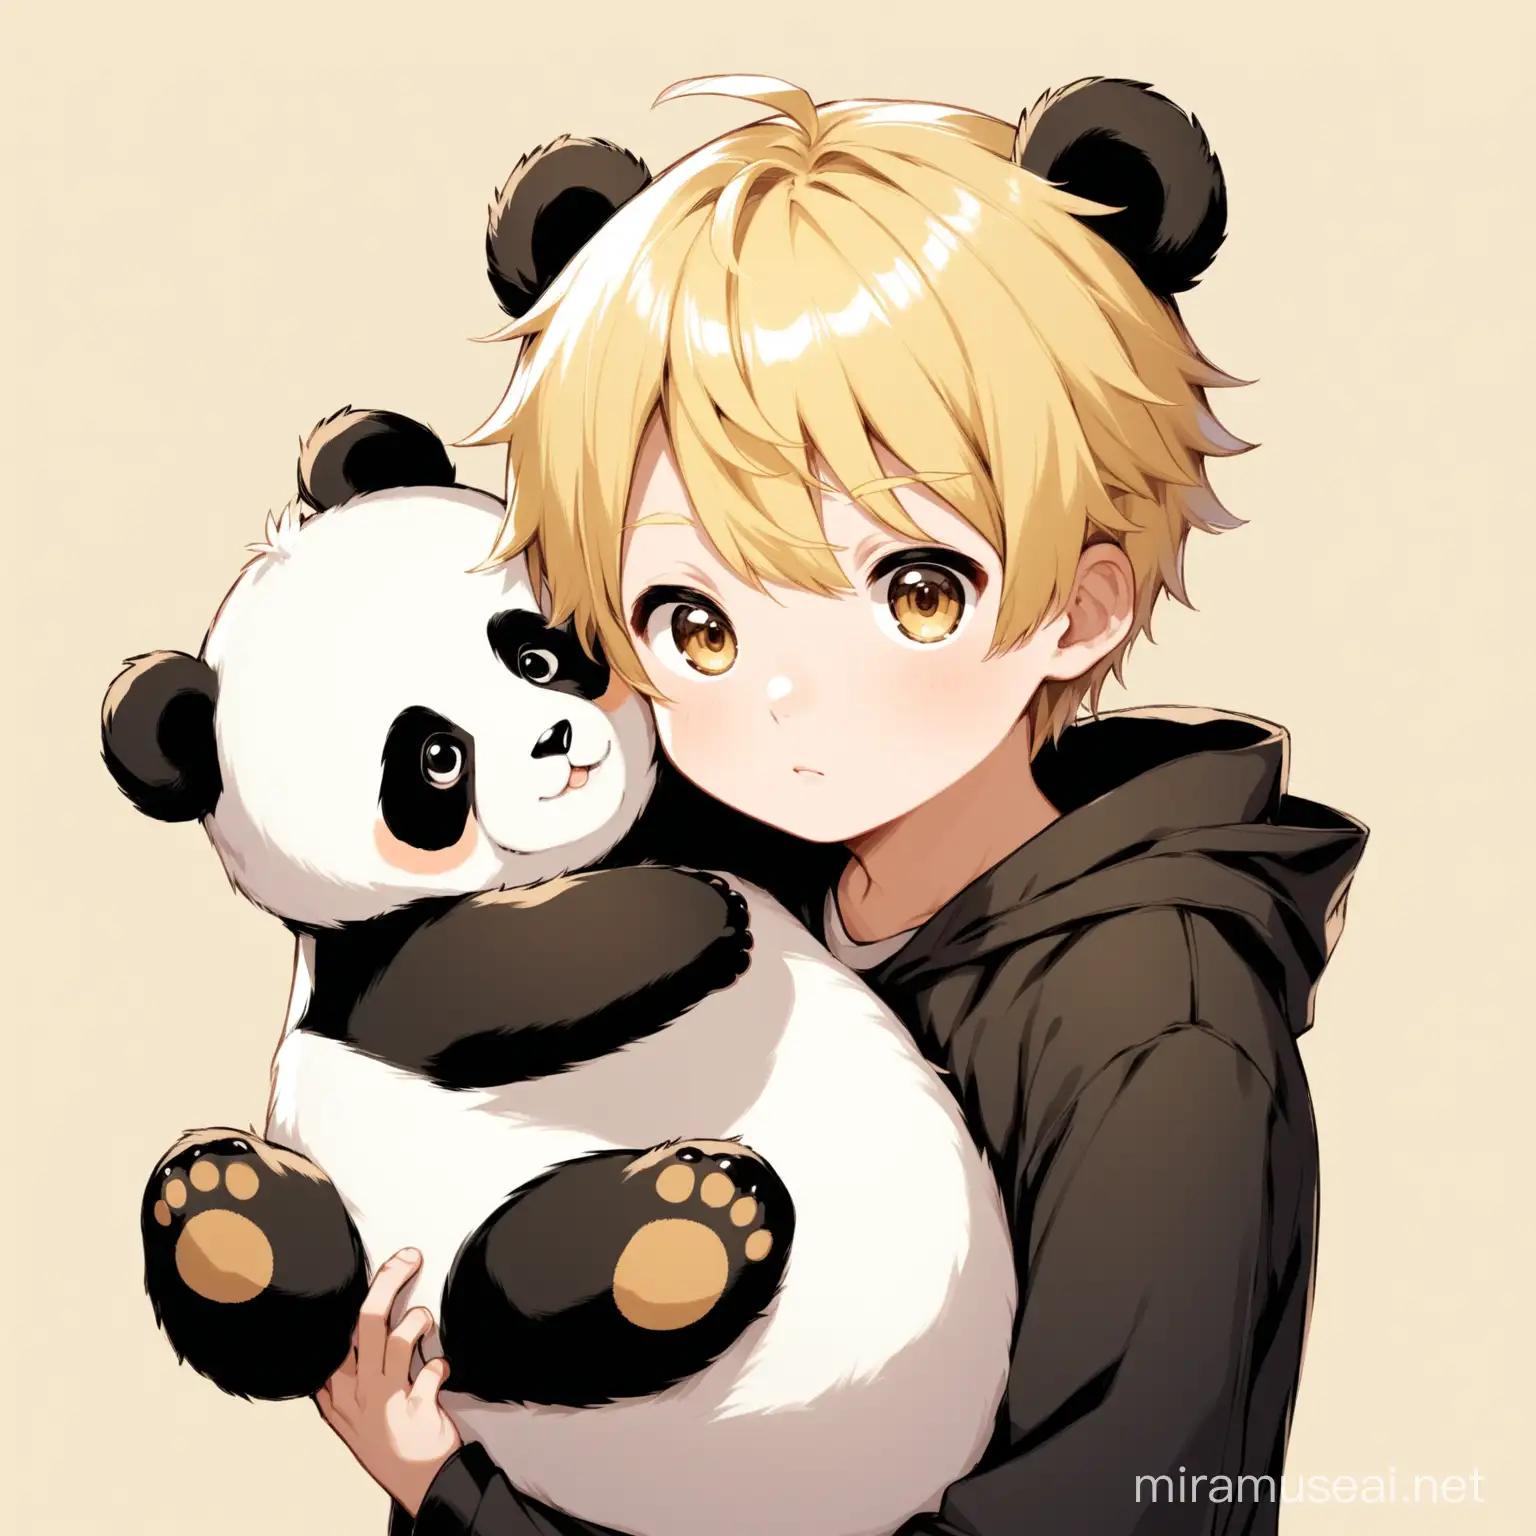 Blond Boy Playing with Panda Bear Toy